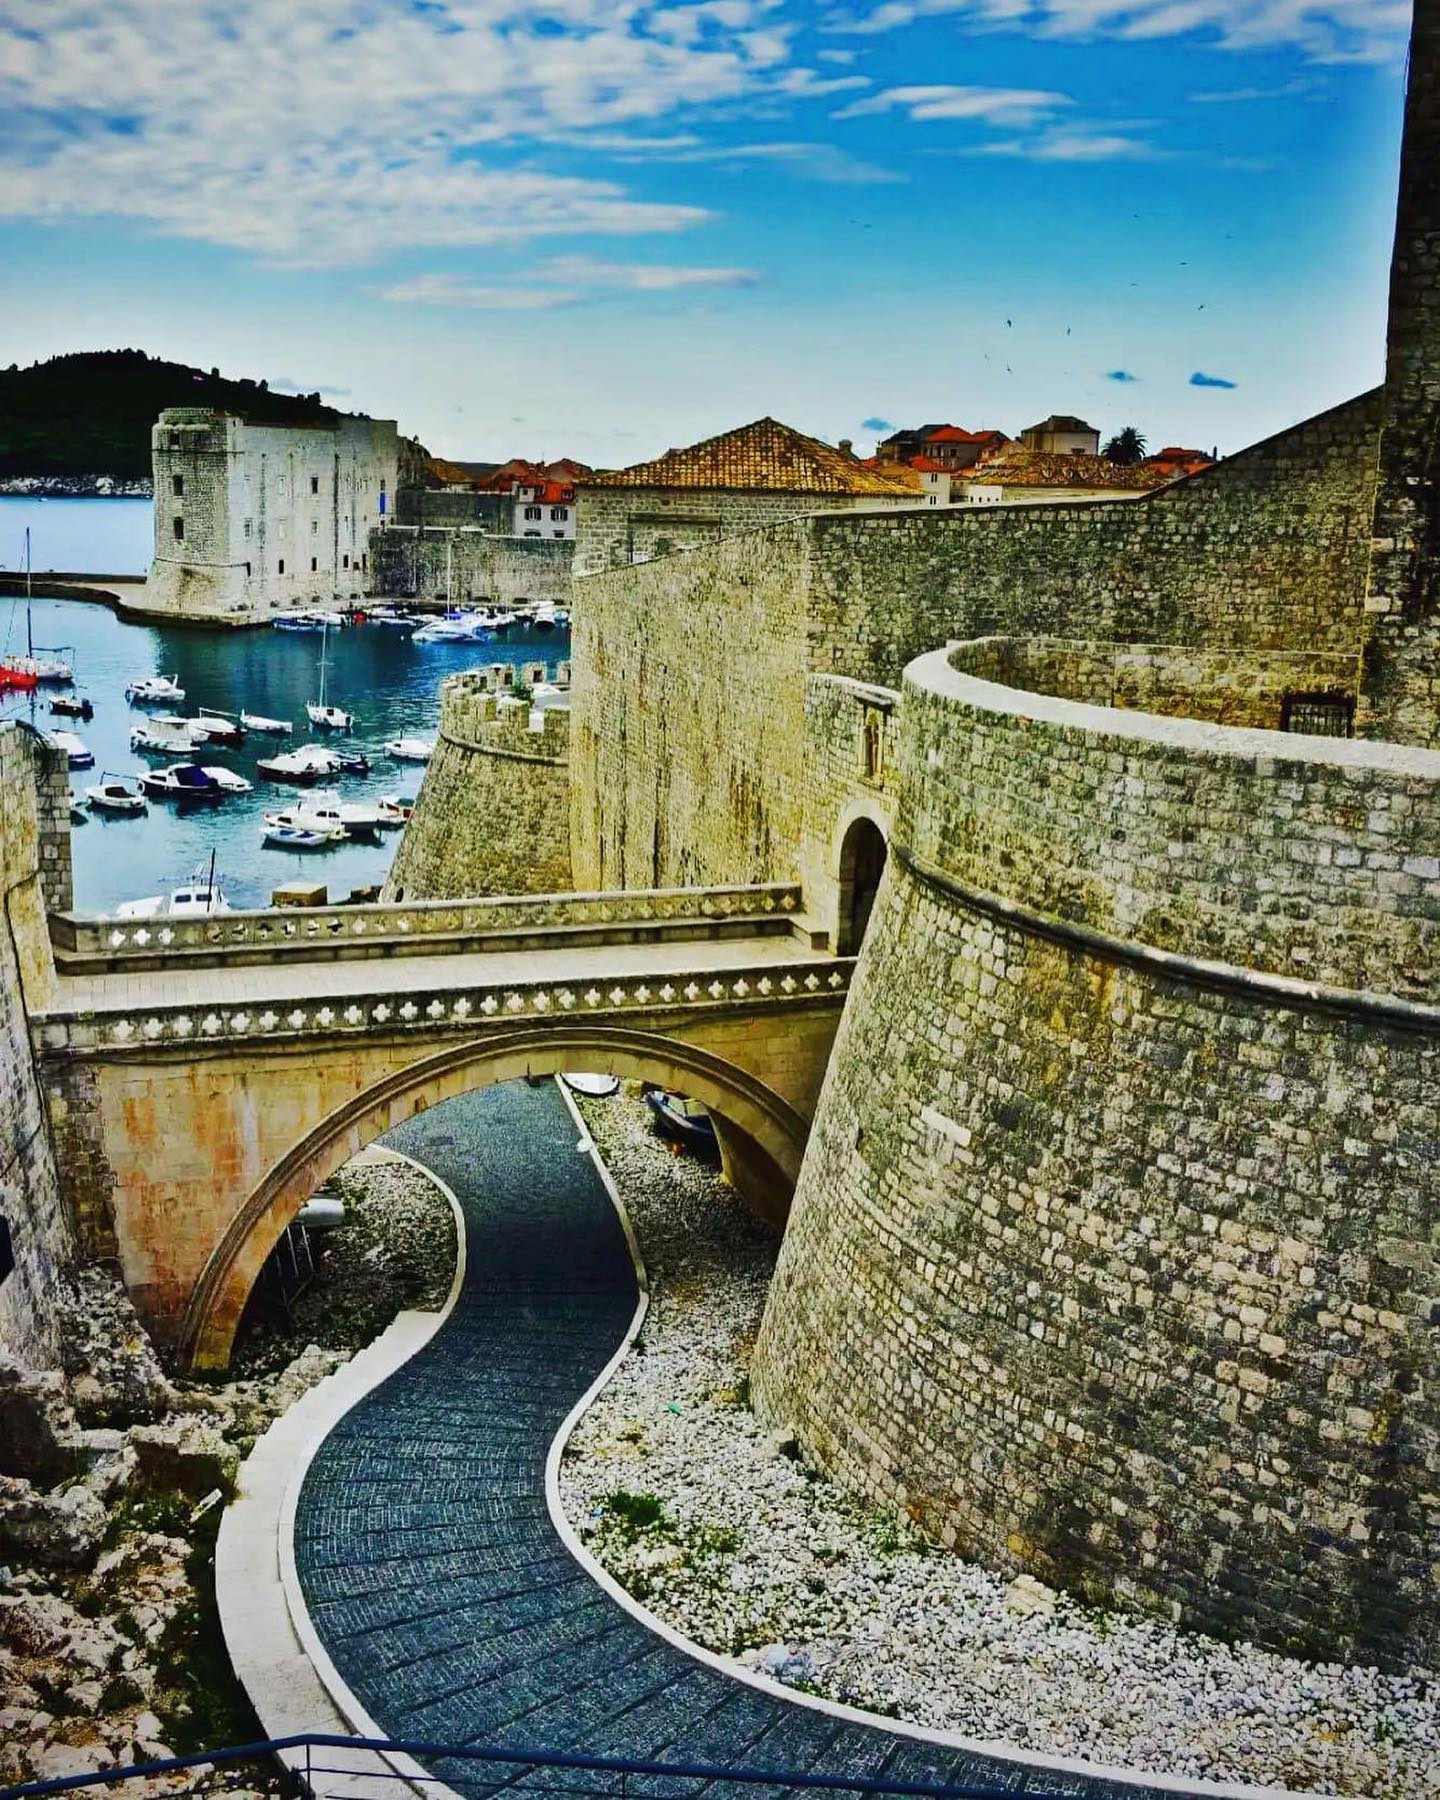 🇭🇷【Croatia 克羅埃西亞】杜布羅夫尼克
⛵️Dubrovnic號稱”亞得里亞海之明珠“，在中世紀全盛期號稱有五百艘商船的艦隊，與威尼斯齊名
🏰舊城區推薦走著名的city wall walk繞古城一圈後到城牆內漫步。上下起伏的山丘地貌，搭配古老的窄巷弄，可發現許多有趣的畫面
👨‍👩‍👧家庭旅行TIP: 考慮住在古城旁民宿，第二天一大早七點去舊城散步，可以見識到寧靜異常無人空城，只剩下早起慢跑與學生上學的在地畫面。

#croatia #dubrovnik #dubrovnikoldtown #克羅埃西亞 #杜布羅夫尼克 #杜布羅夫尼克古城 #把世界當教室🌍 #travelwithmikeanna